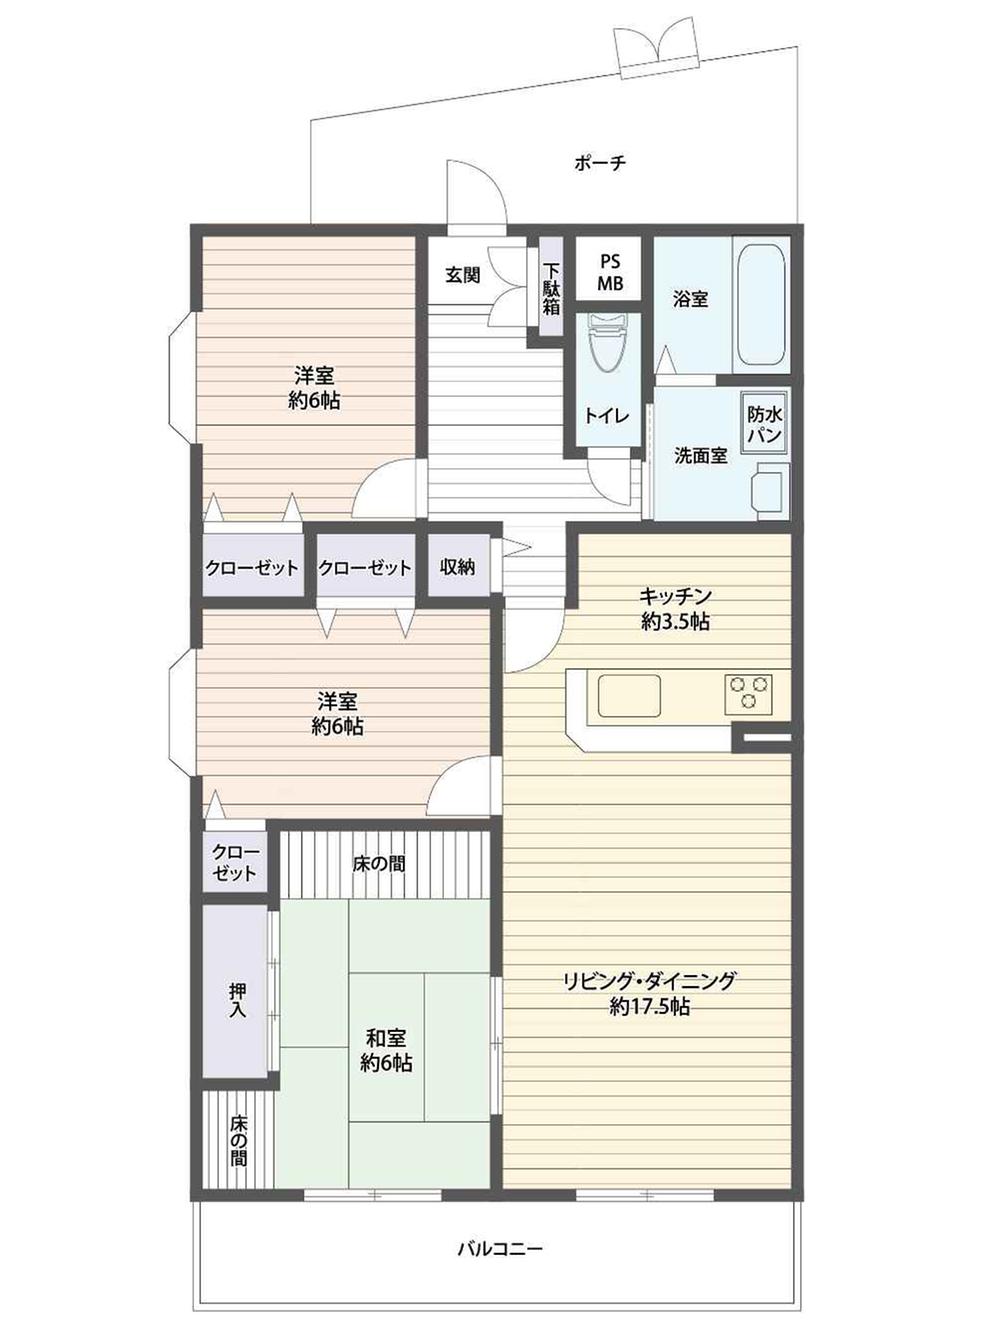 Floor plan. 3LDK, Price 17.8 million yen, Occupied area 77.17 sq m , Balcony area 9.42 sq m